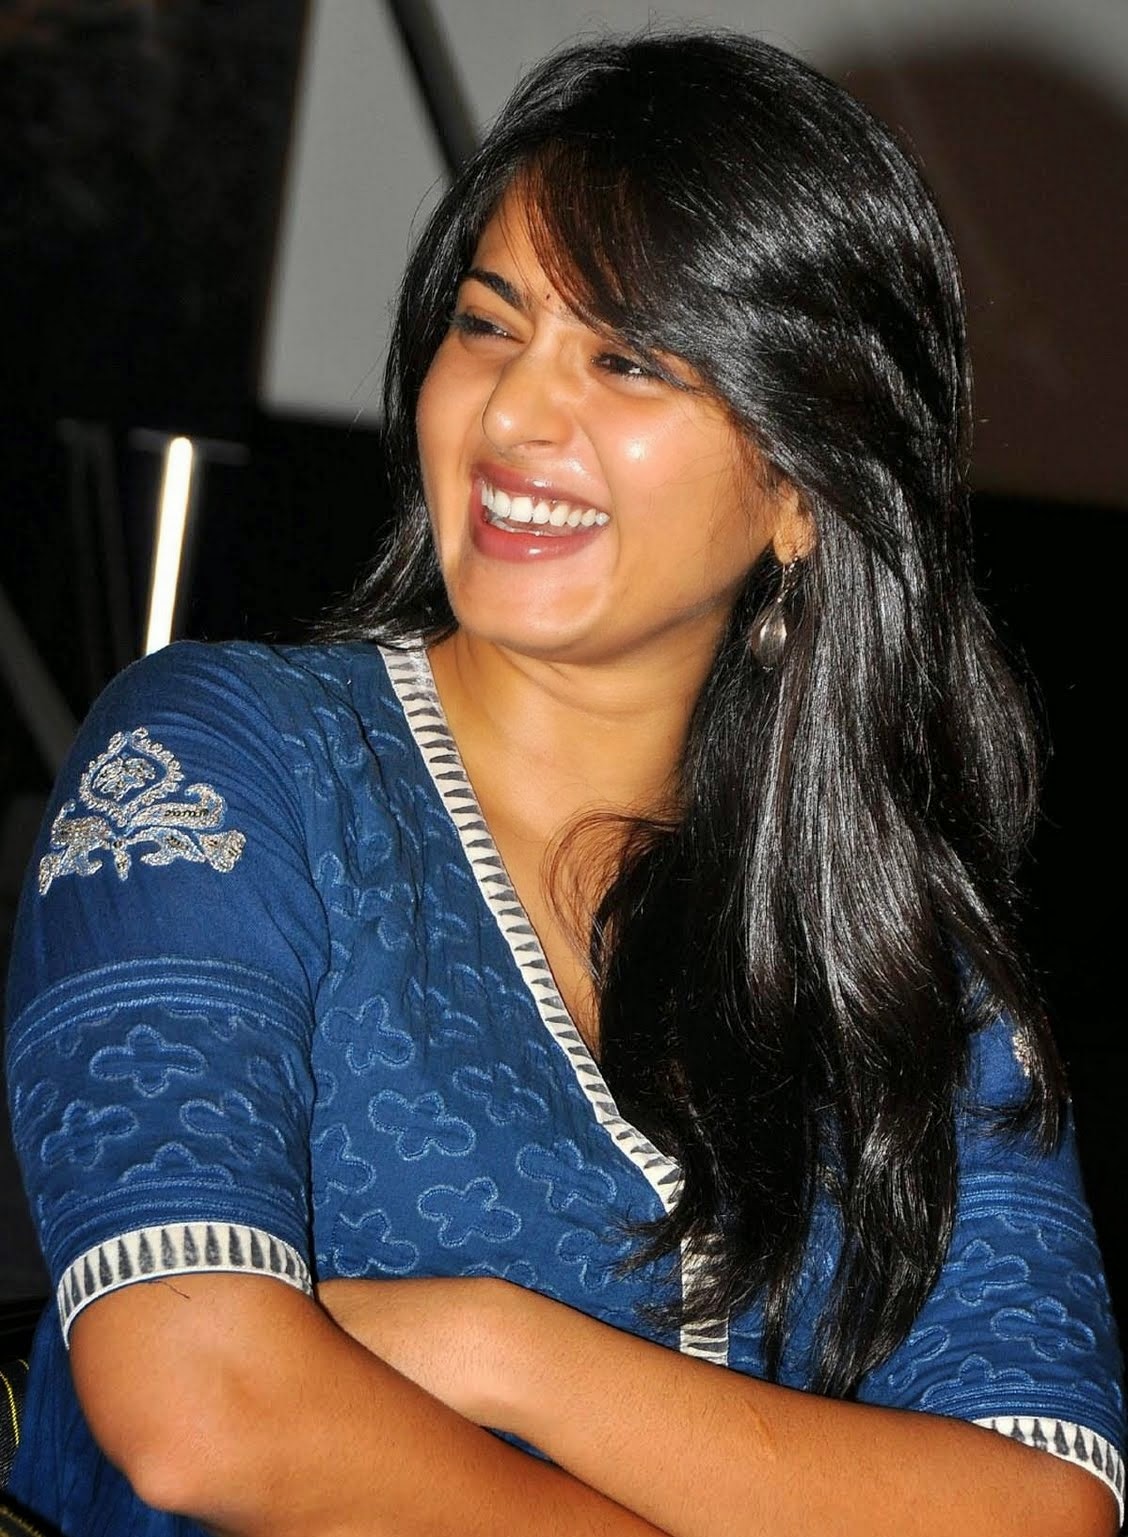 Tollywood Actress Anushka Shetty Hot Smiling Face Photos In Blue Dress